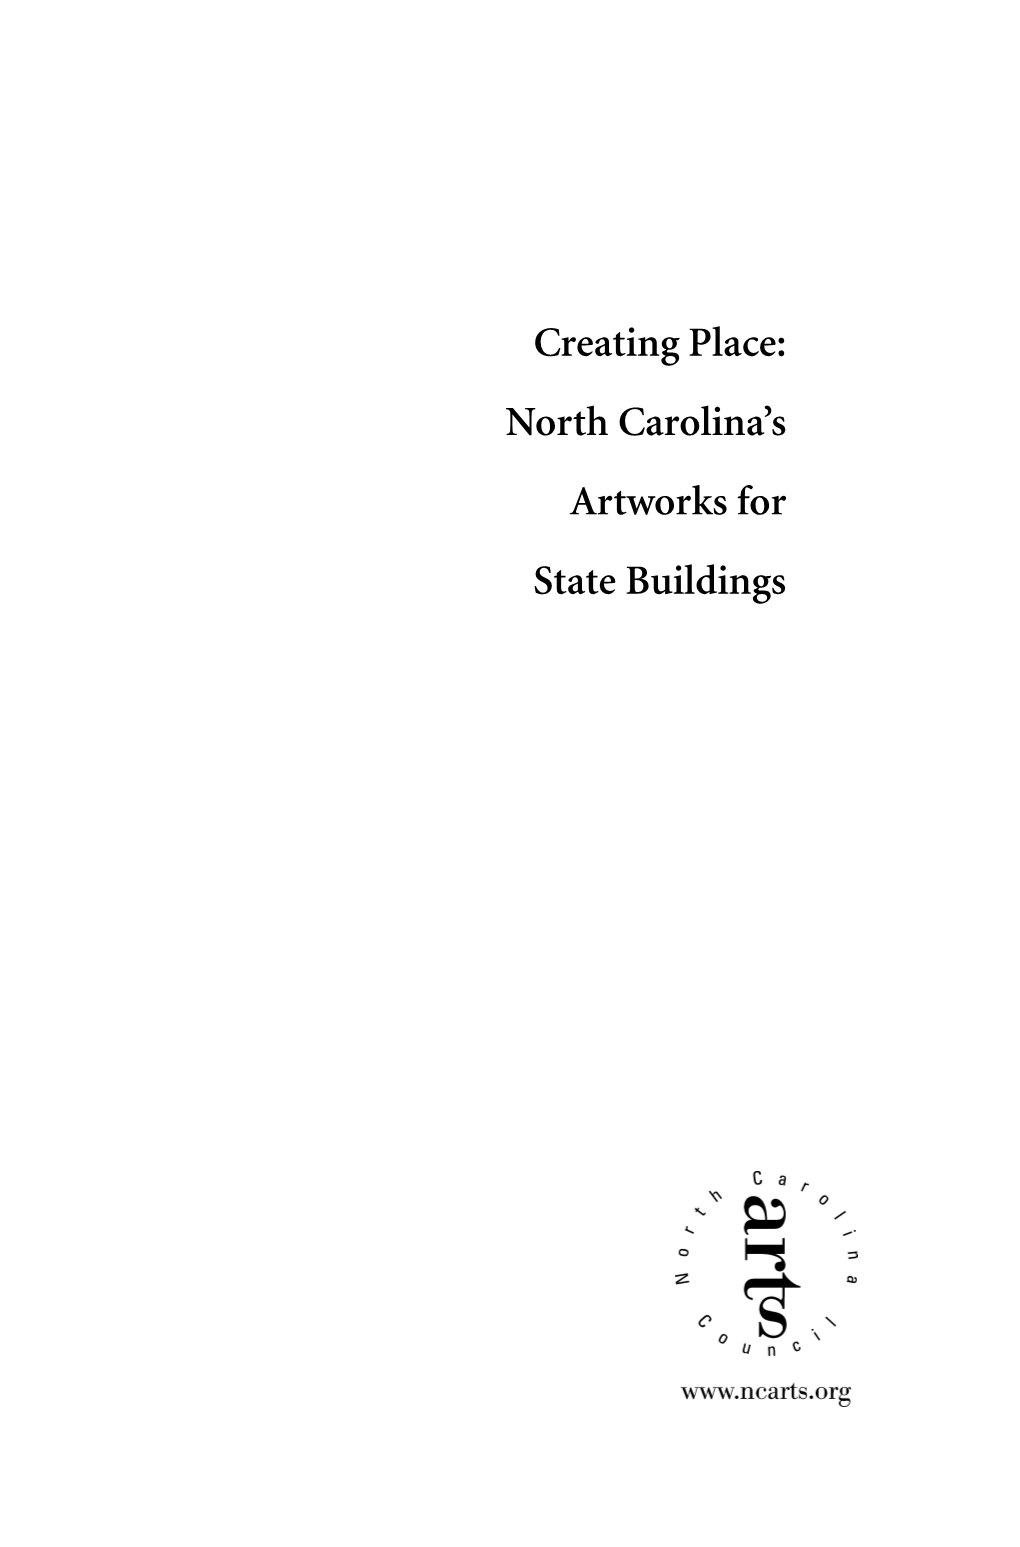 North Carolina's Artworks for State Buildings